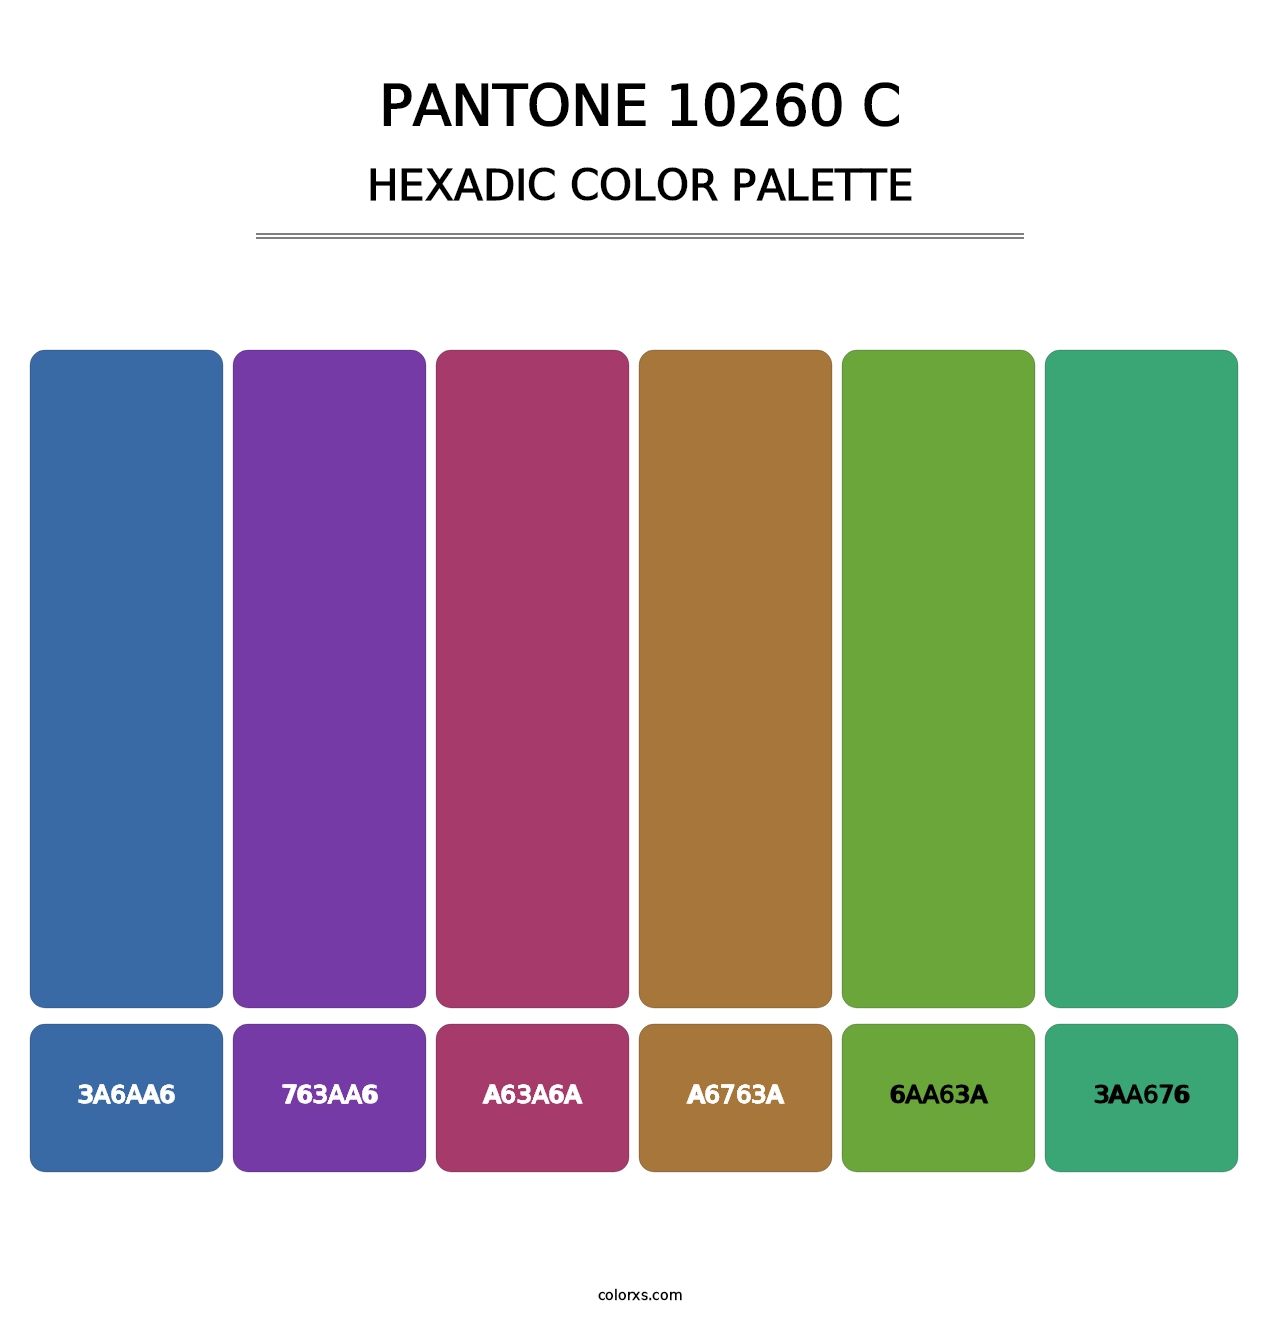 PANTONE 10260 C - Hexadic Color Palette